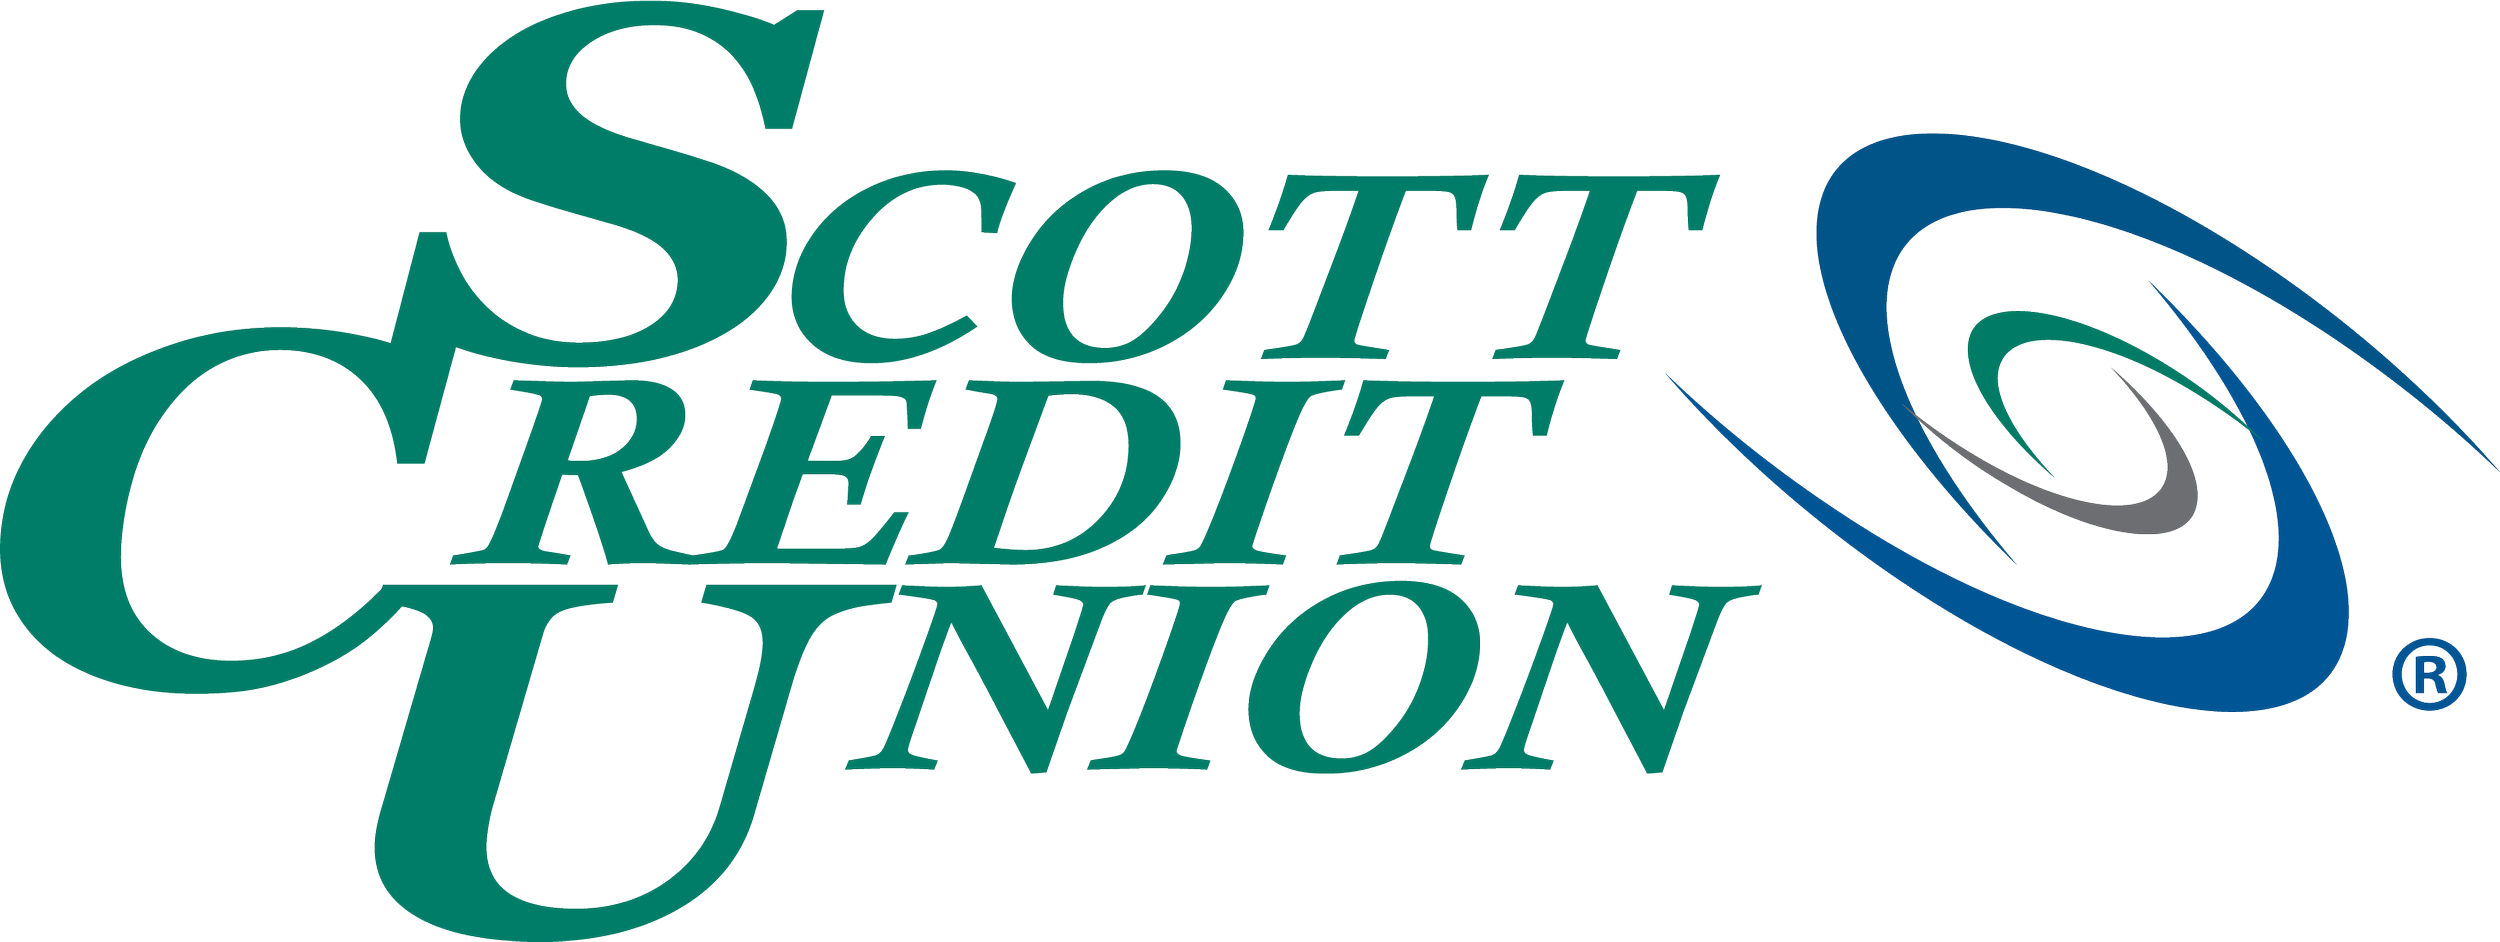 Scott Credit Union.png